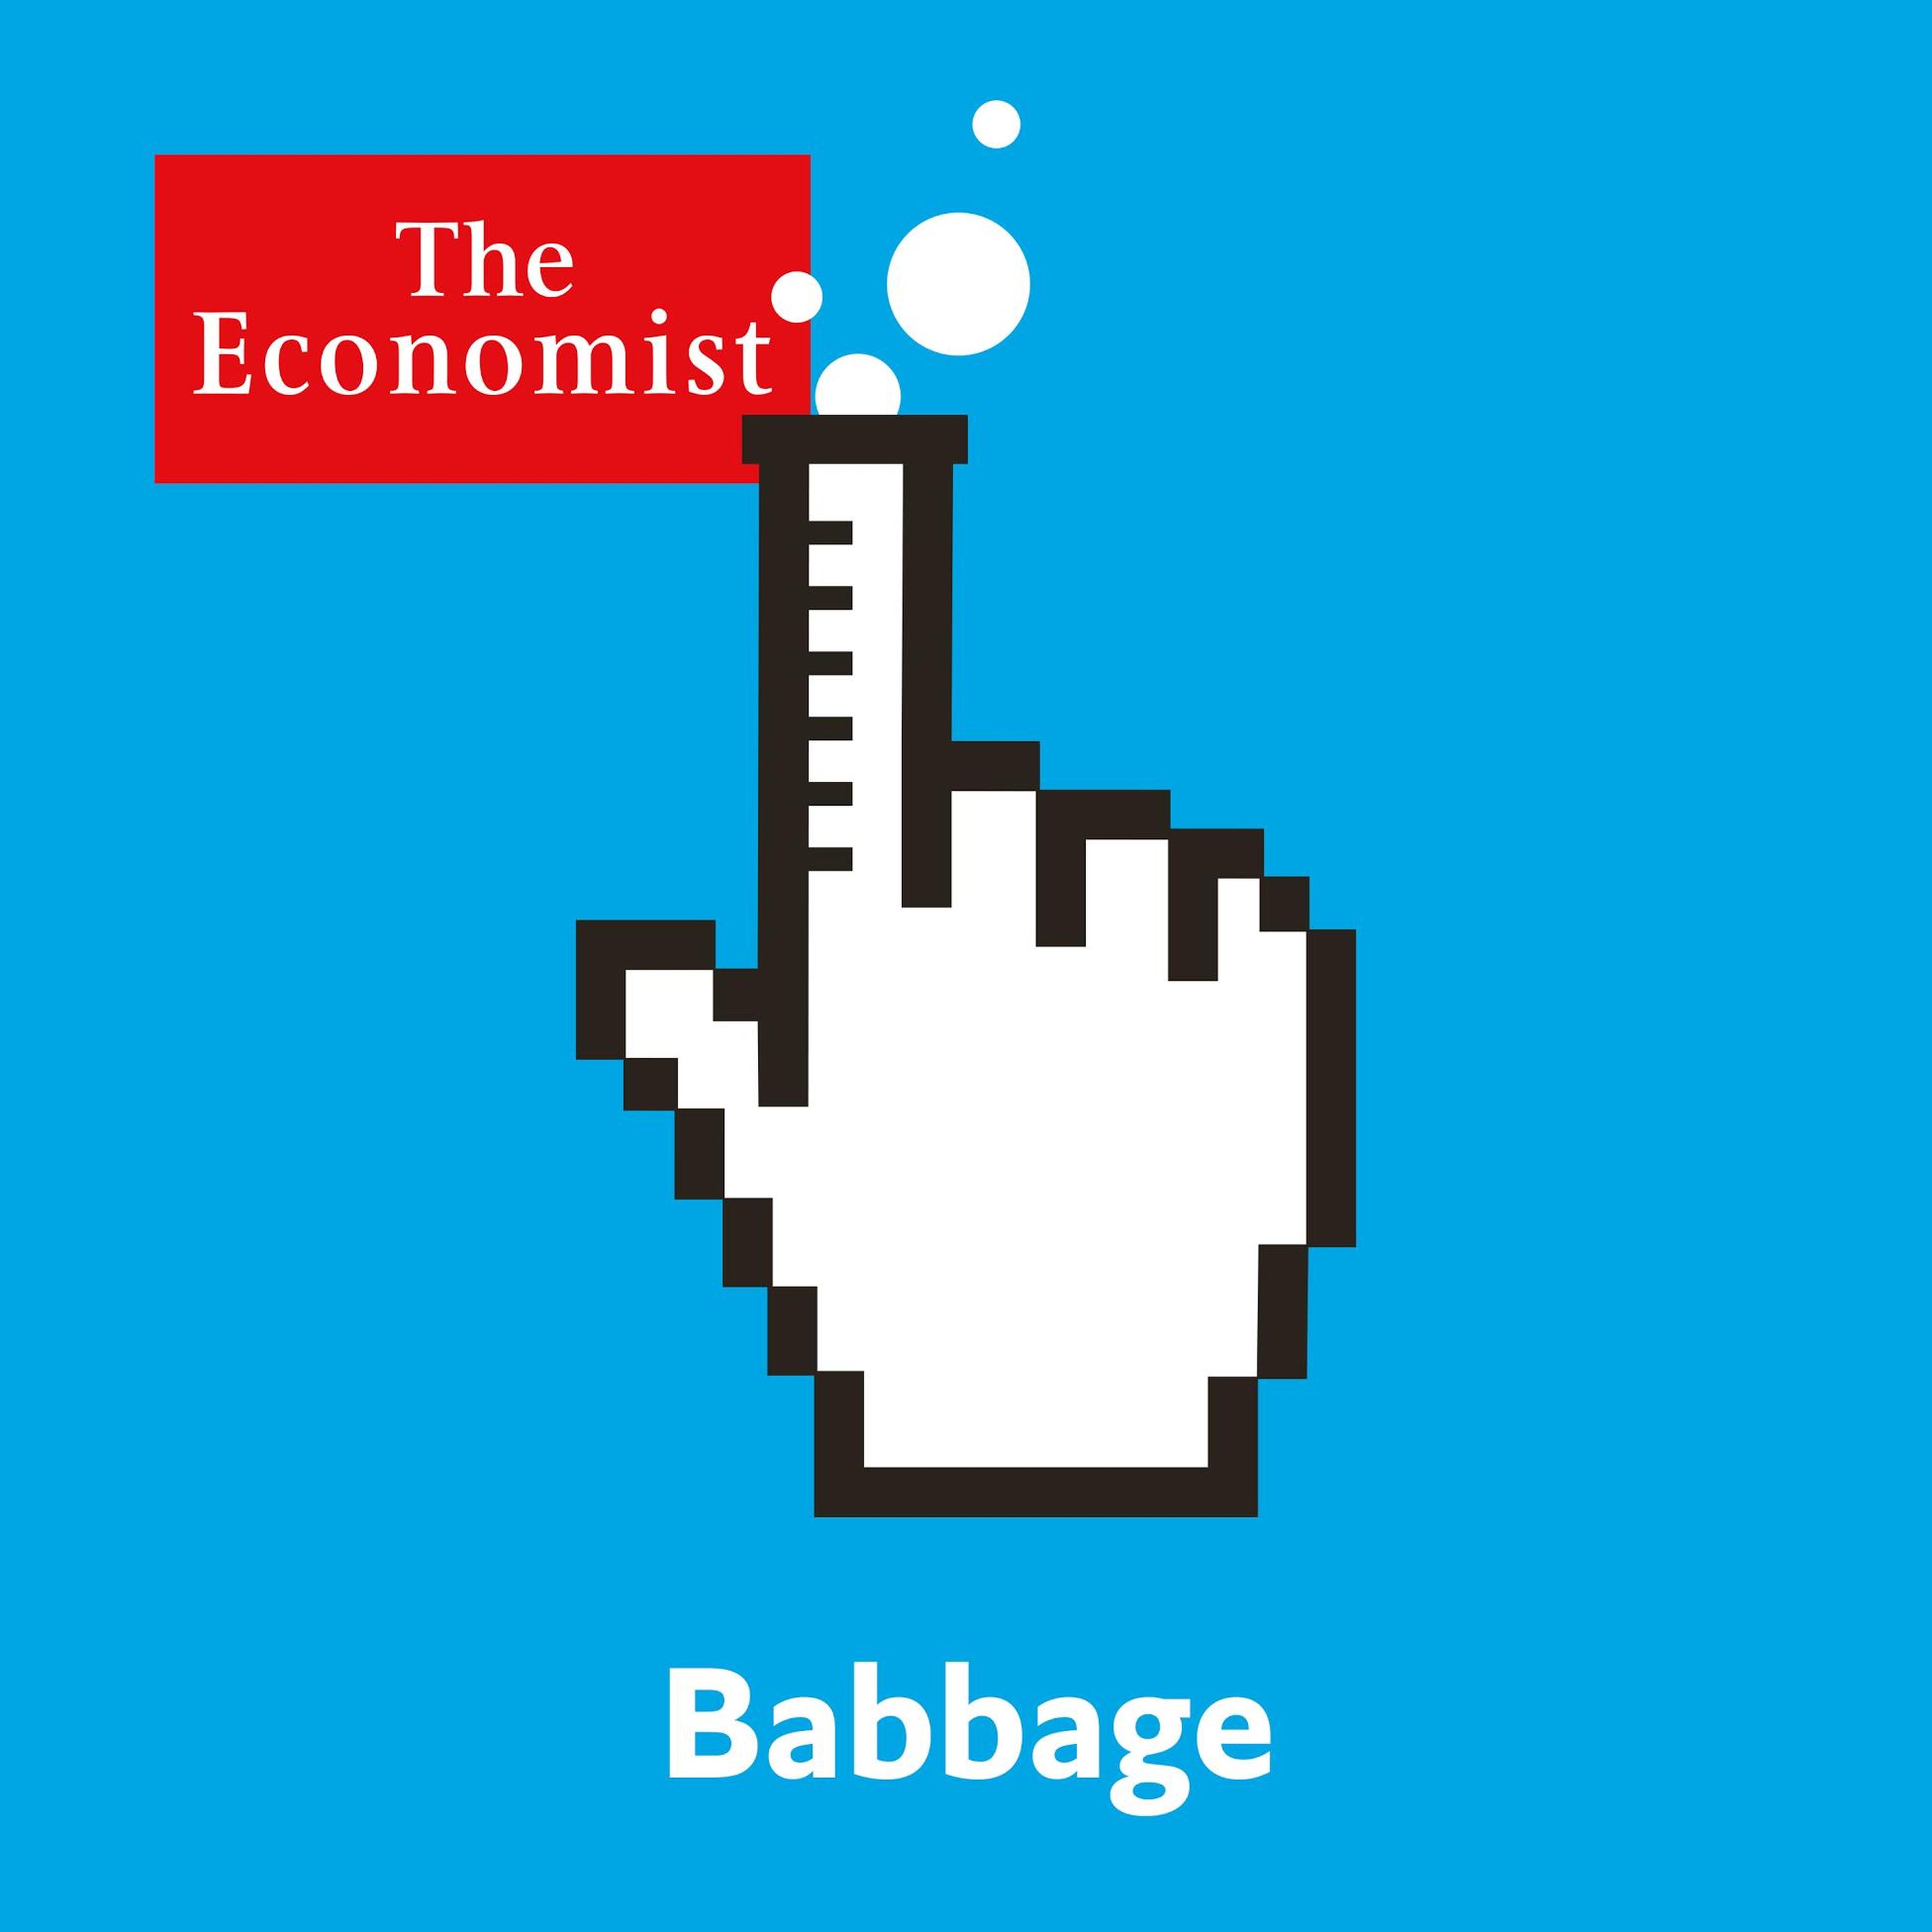 Babbage: Havana syndrome